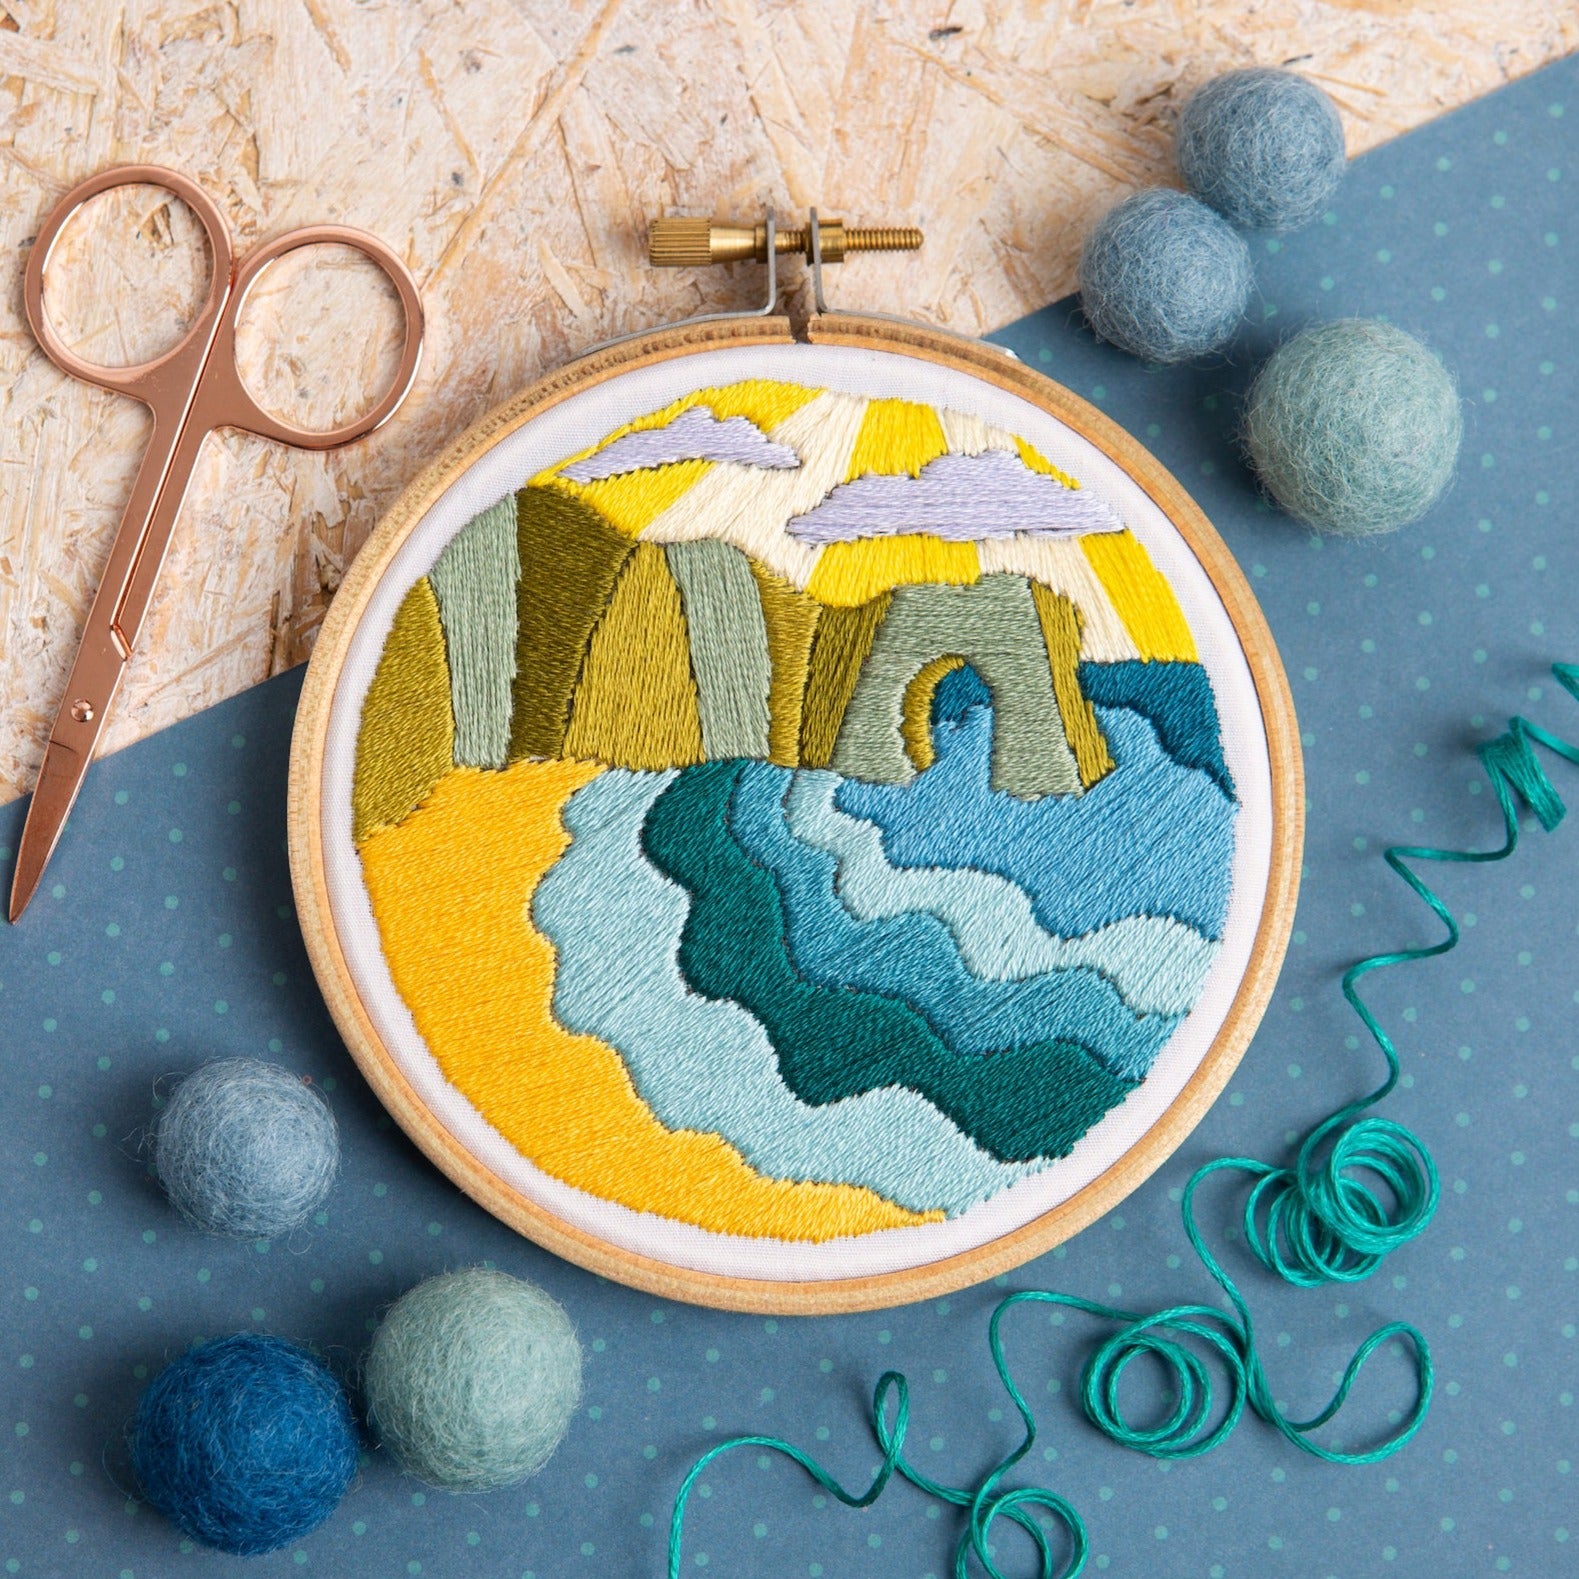 Embroidery Kits, Needle Felting Kits, Cross Stitch Kits, Felt